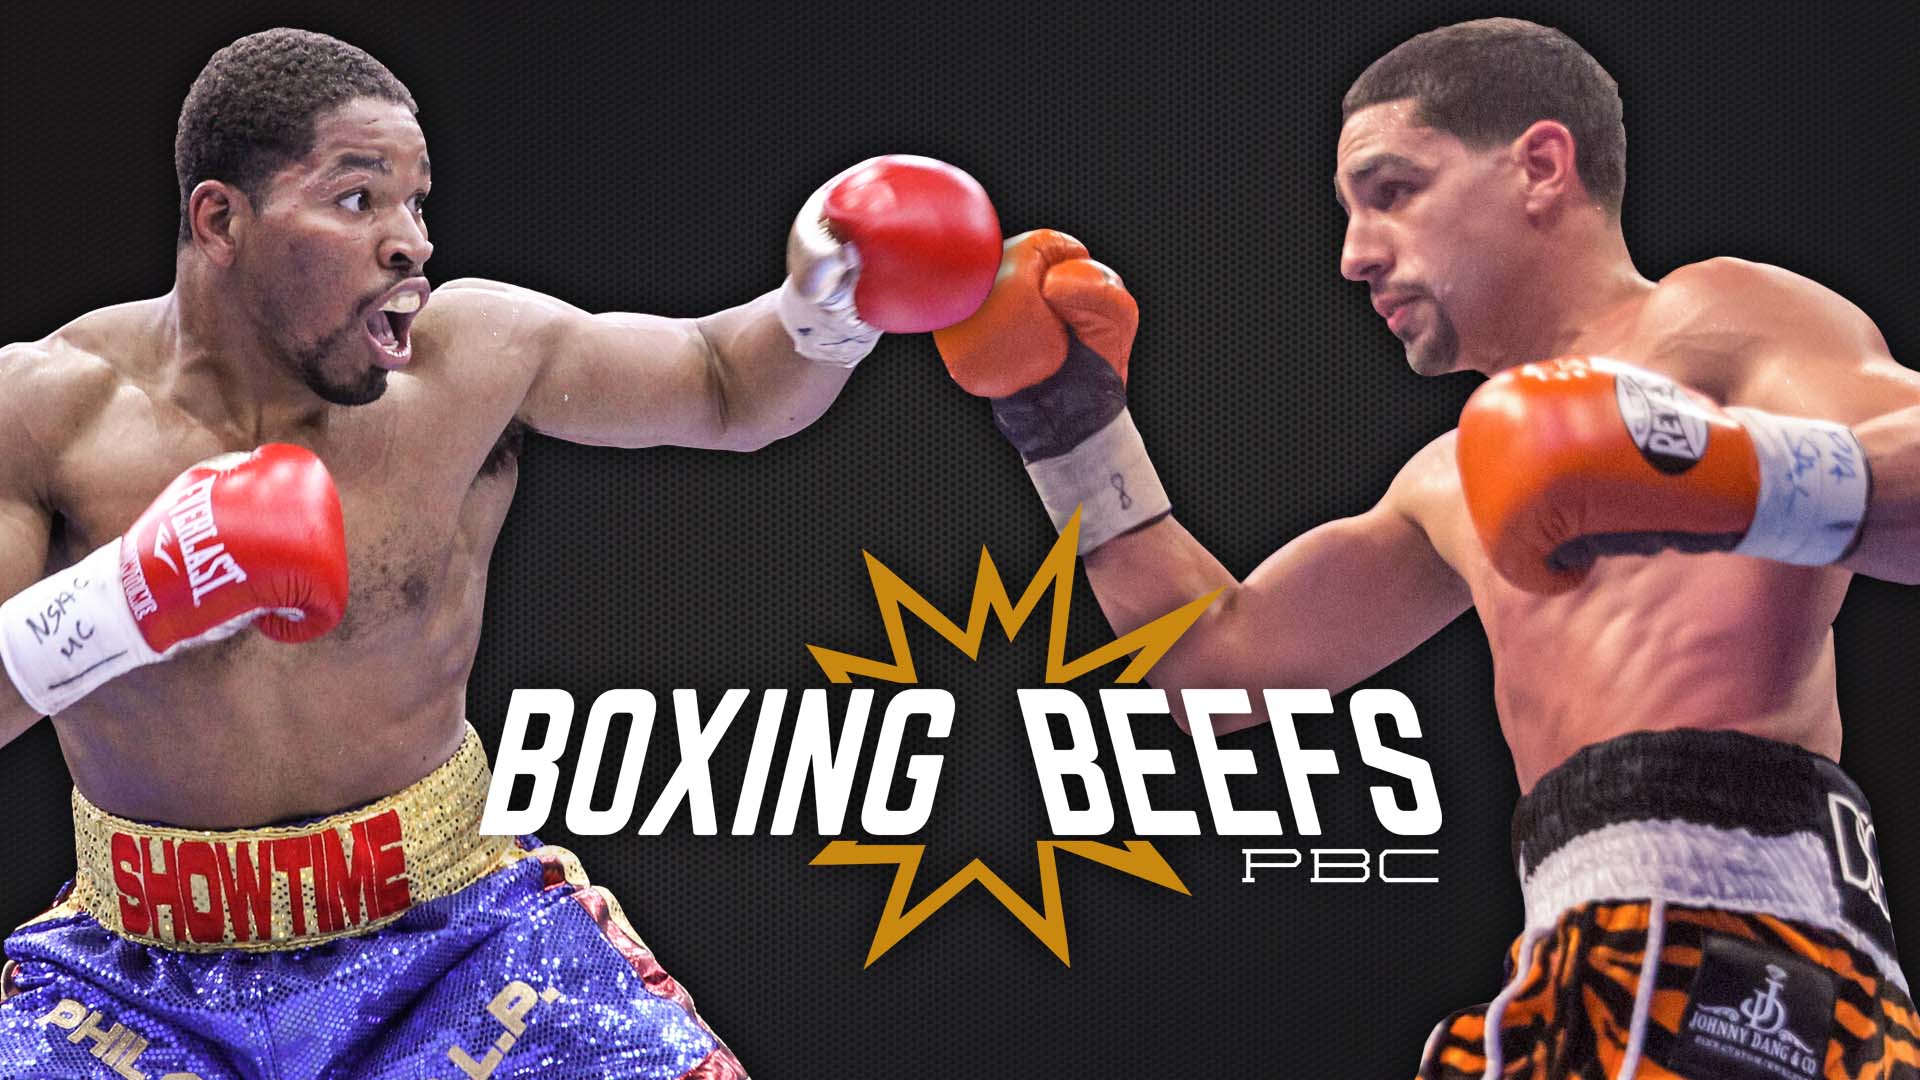 PBC Boxing Beefs: Shawn Porter vs Danny Garcia1920 x 1080